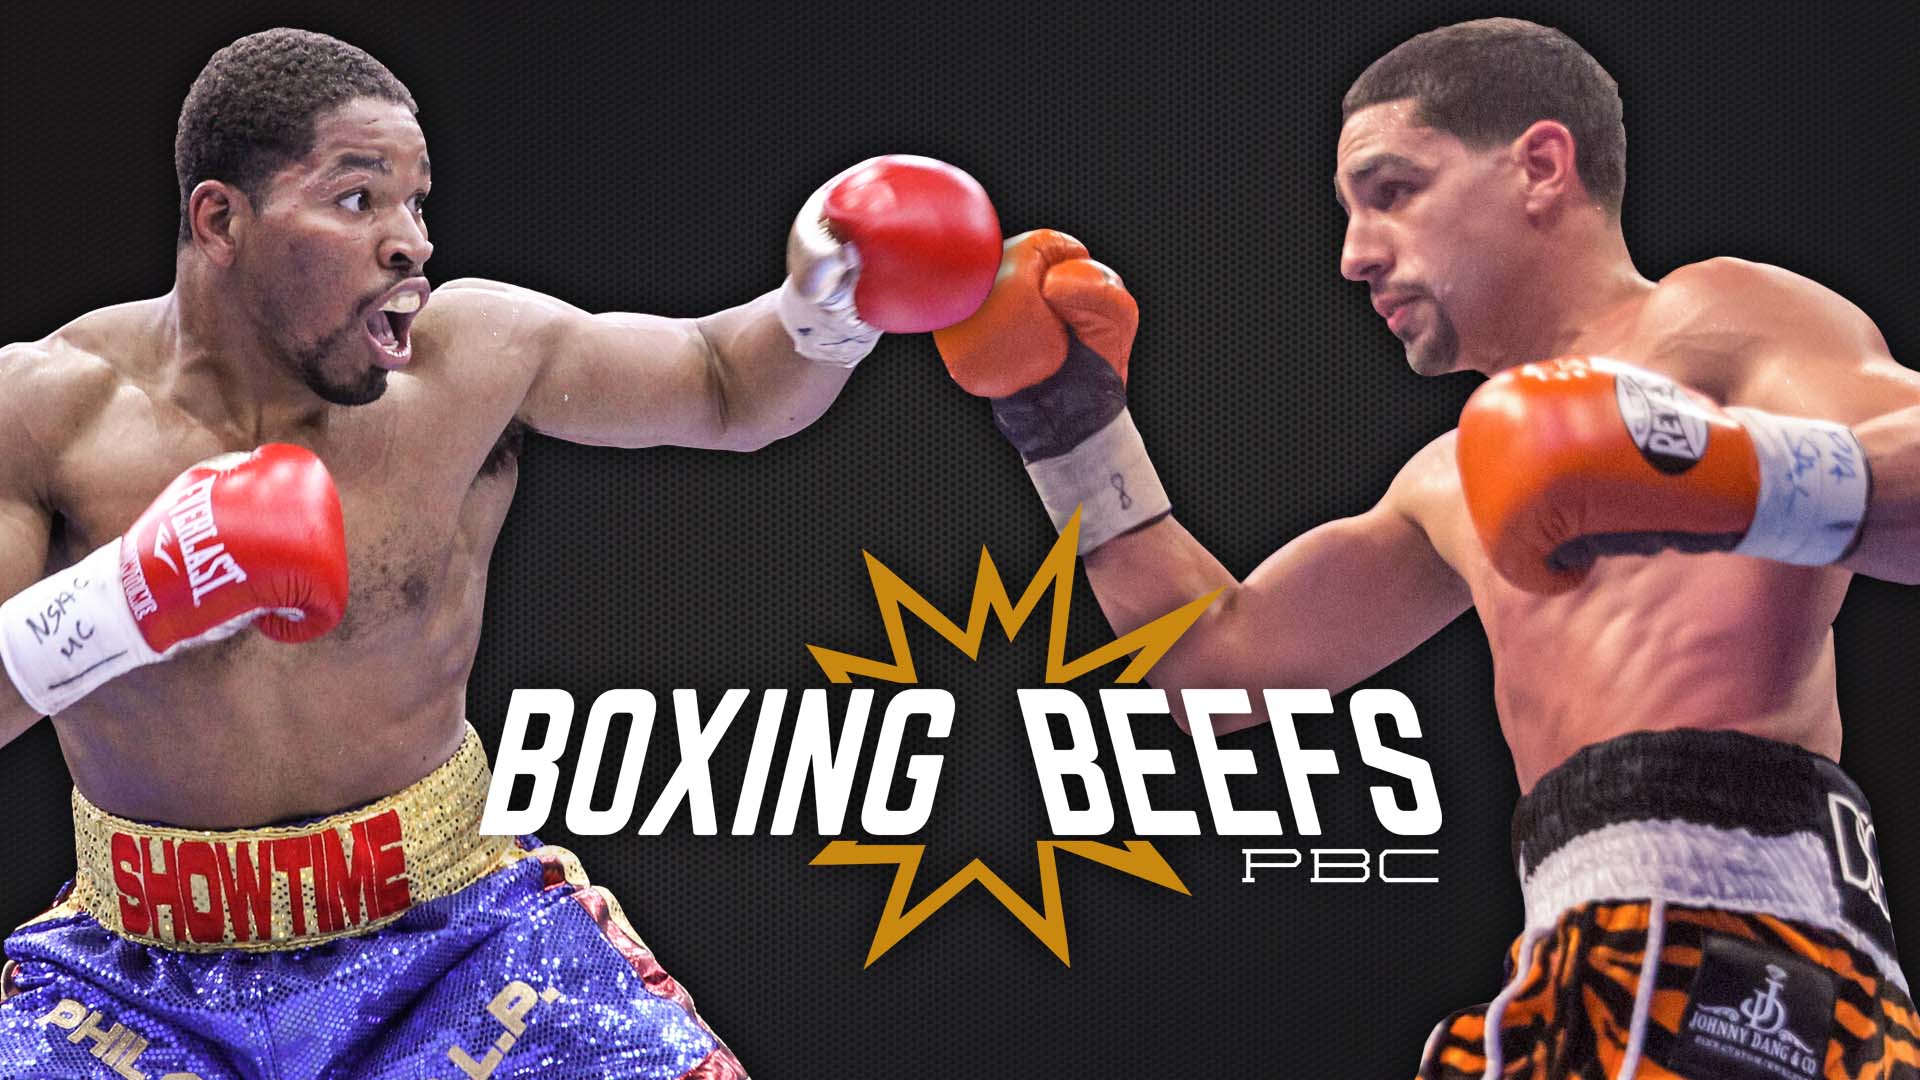 PBC Boxing Beefs: Shawn Porter vs Danny Garcia1920 x 1080